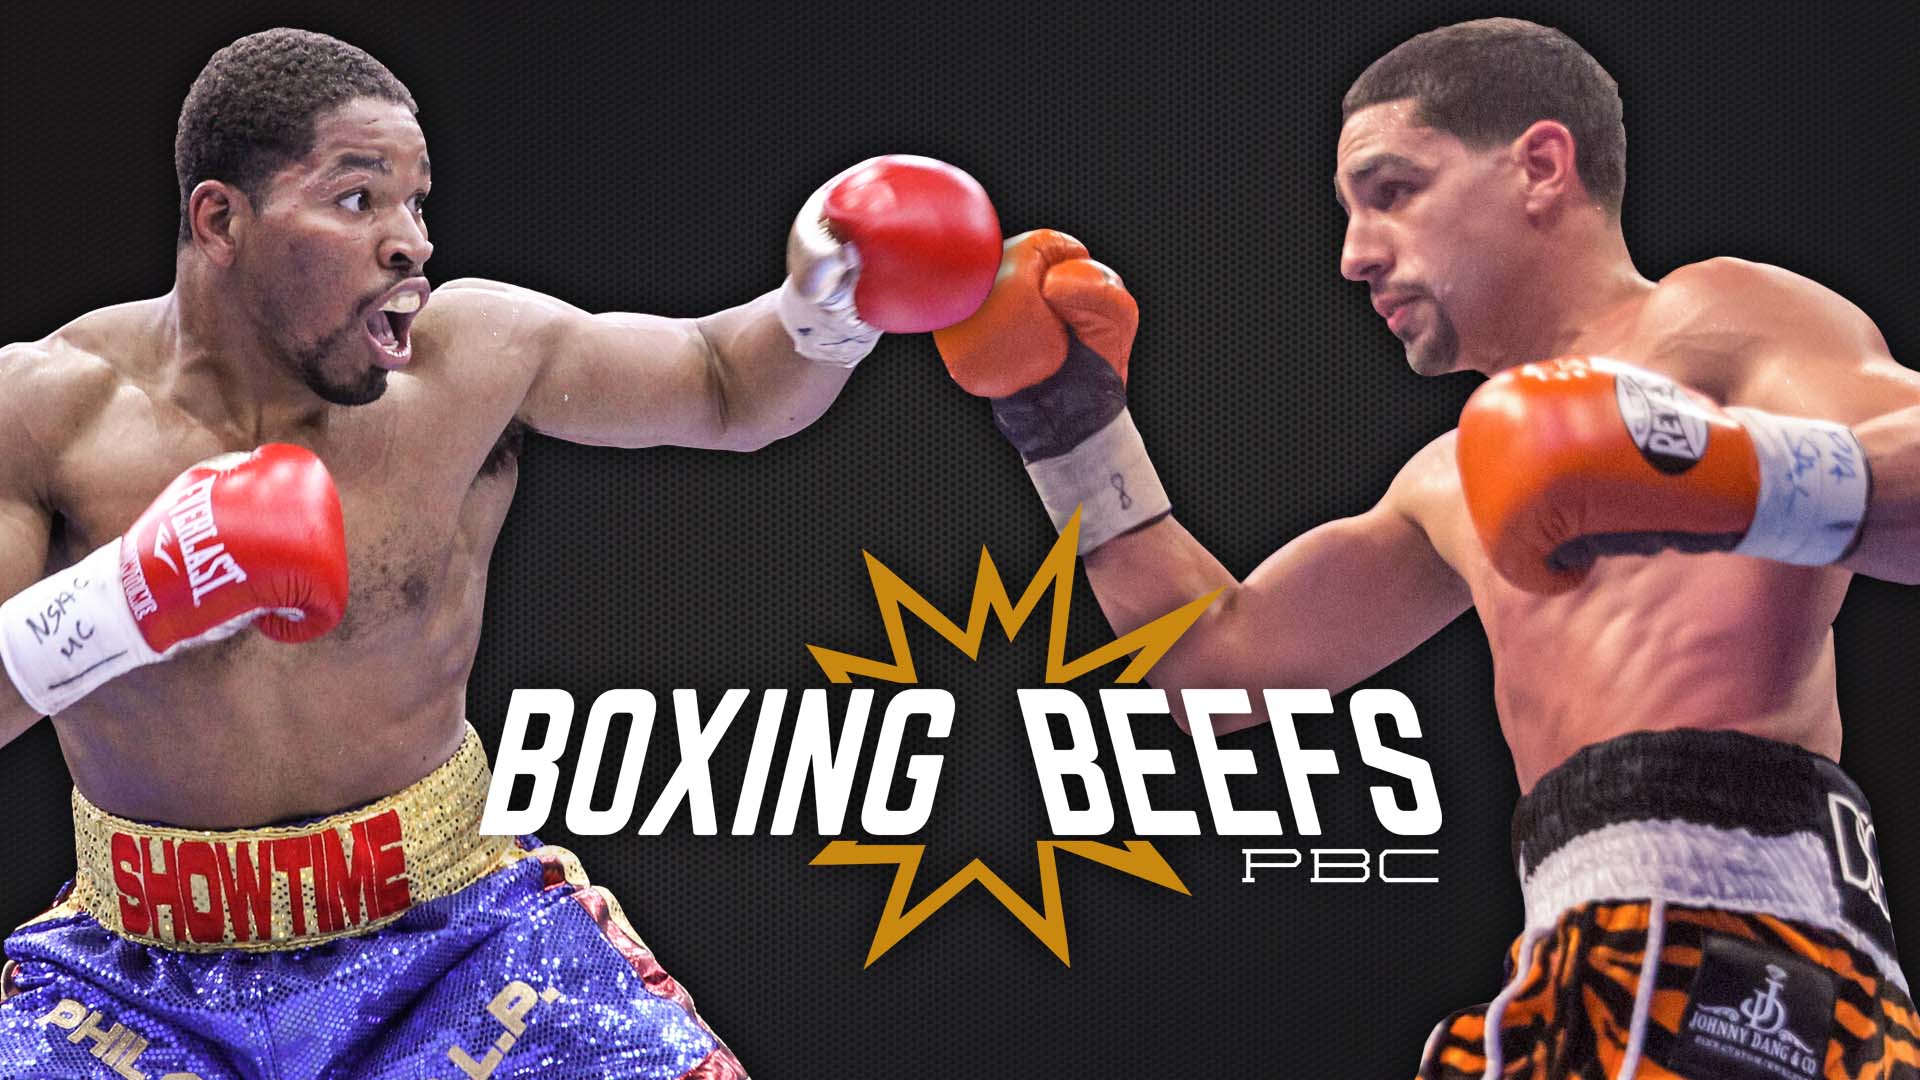 PBC Boxing Beefs: Shawn Porter vs Danny Garcia1920 x 1080